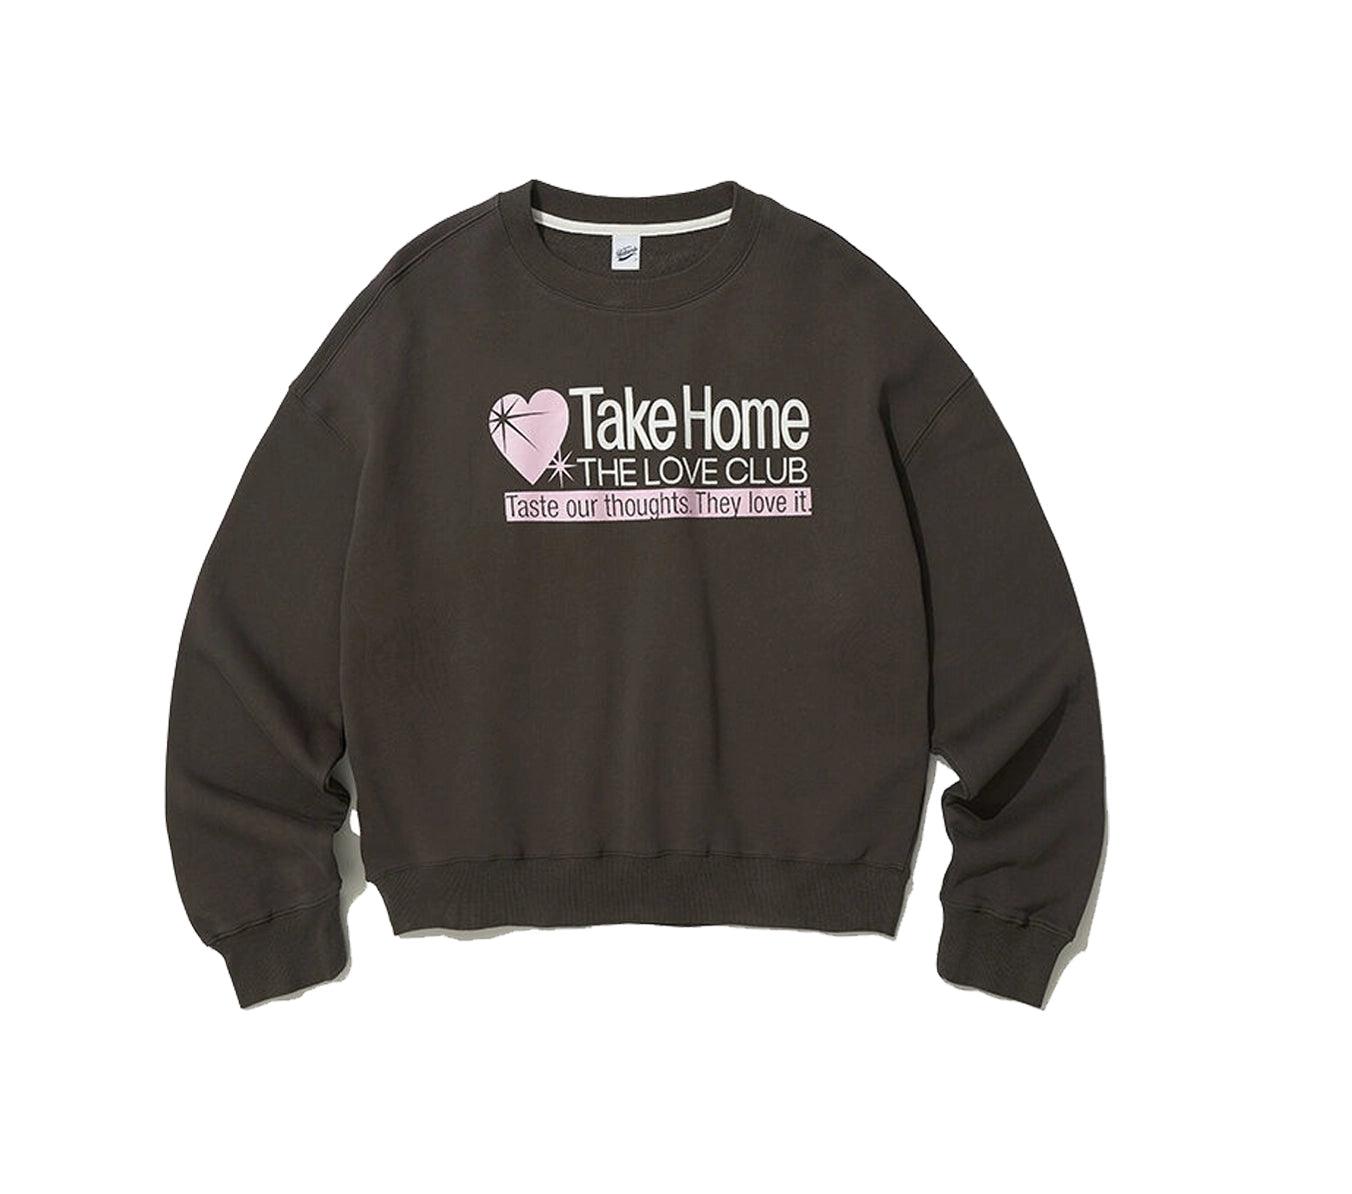 Partimento Take Home Sweatshirt - Charcoal - One size -